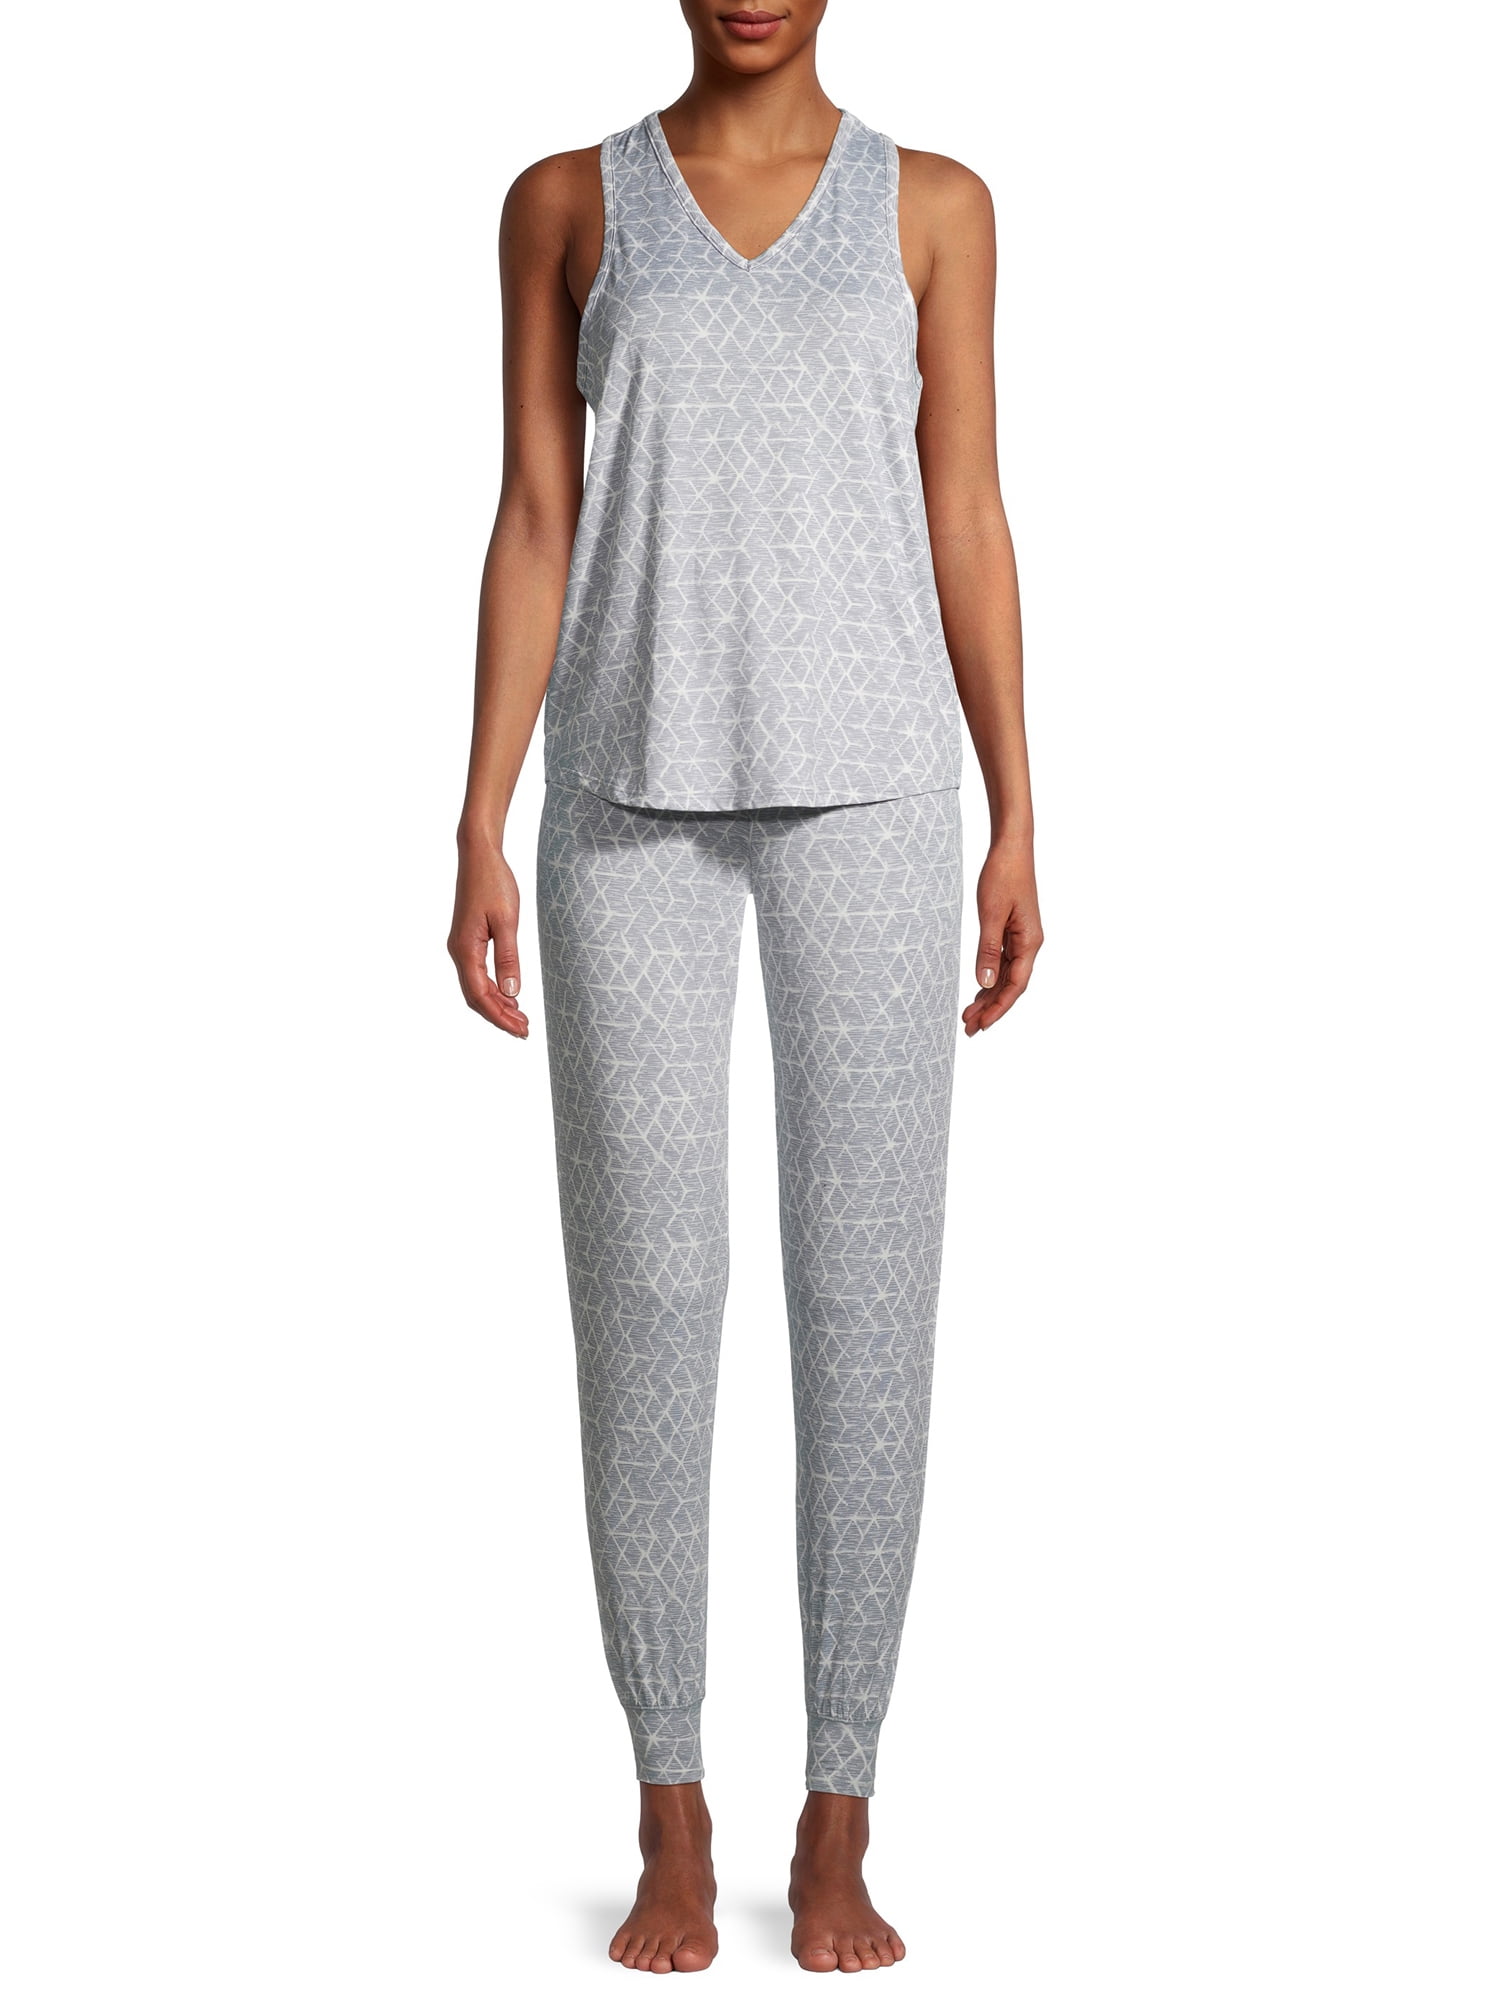 AILMY Womens Pajama Set Star Print Long Sleeve Sleepwear Nightwear Soft Pjs Lounge Sets with Pockets